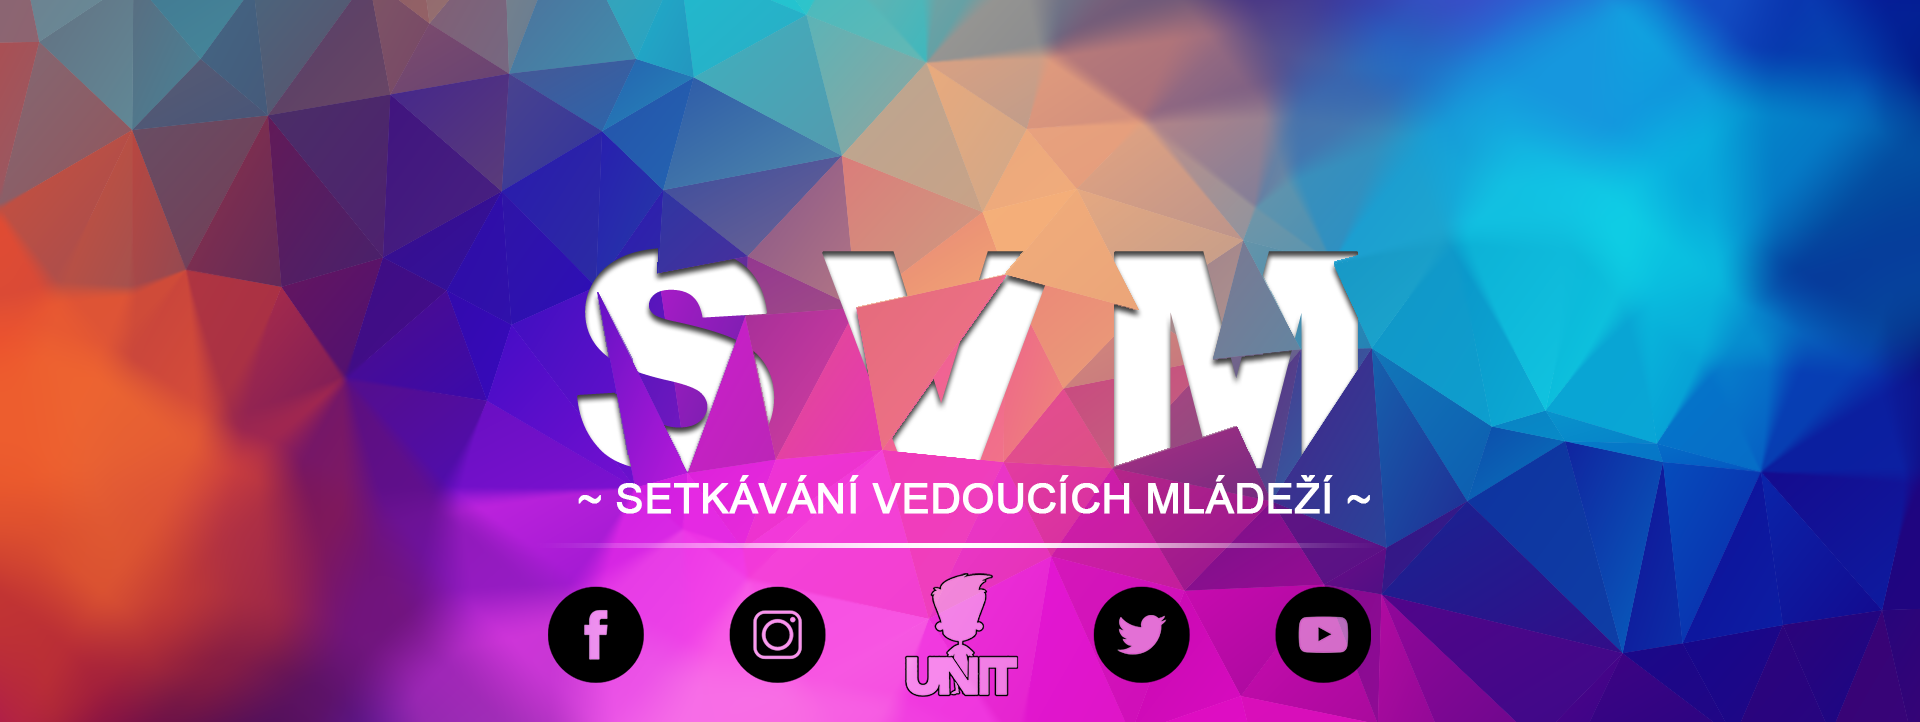 svm-banner